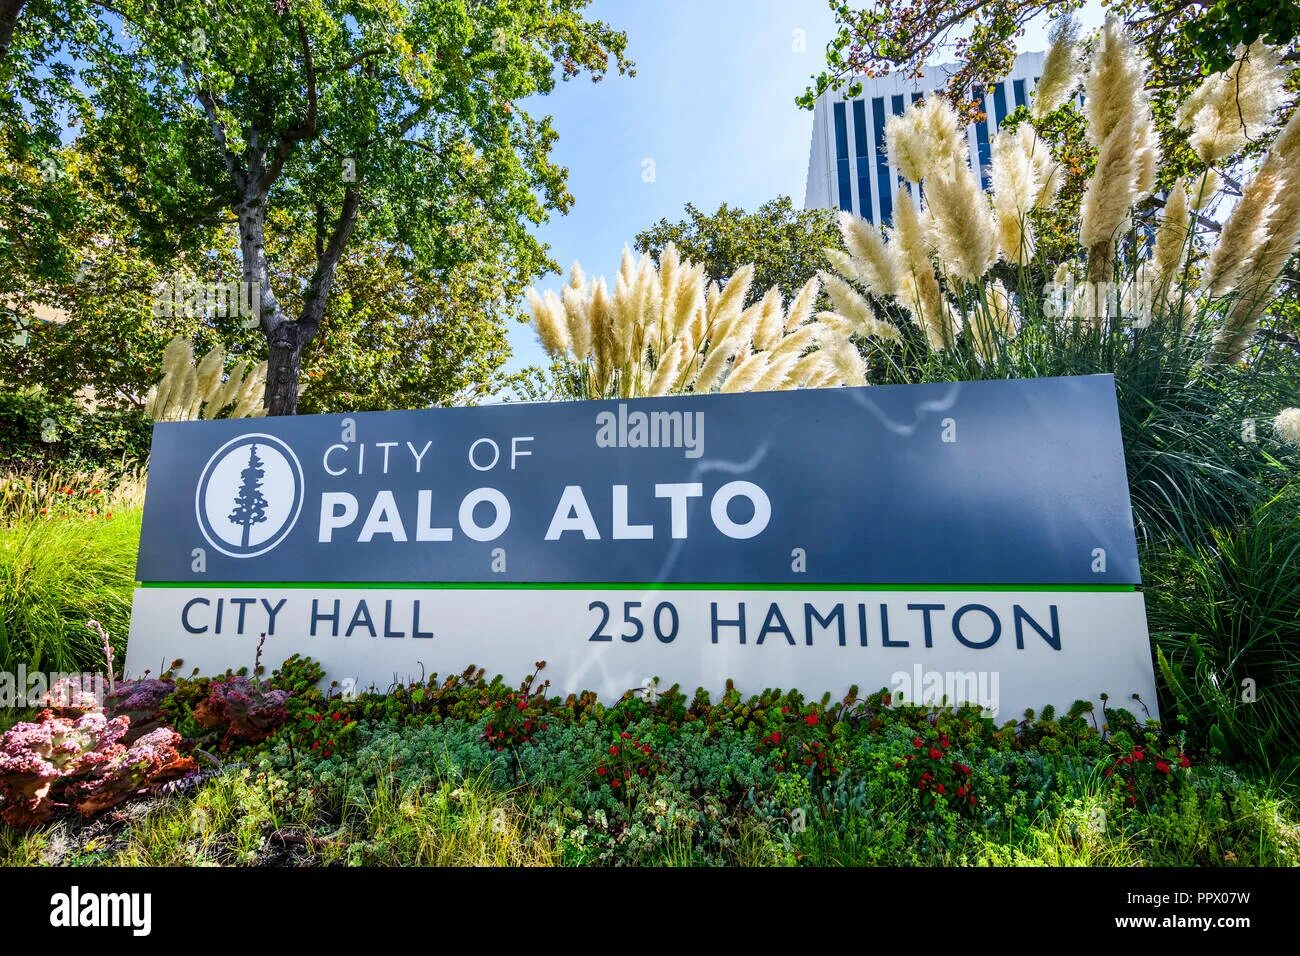 Palo Alto City. Пало-Альто город в США. Города вокруг Пало Альто. City logo Palo Alto California.